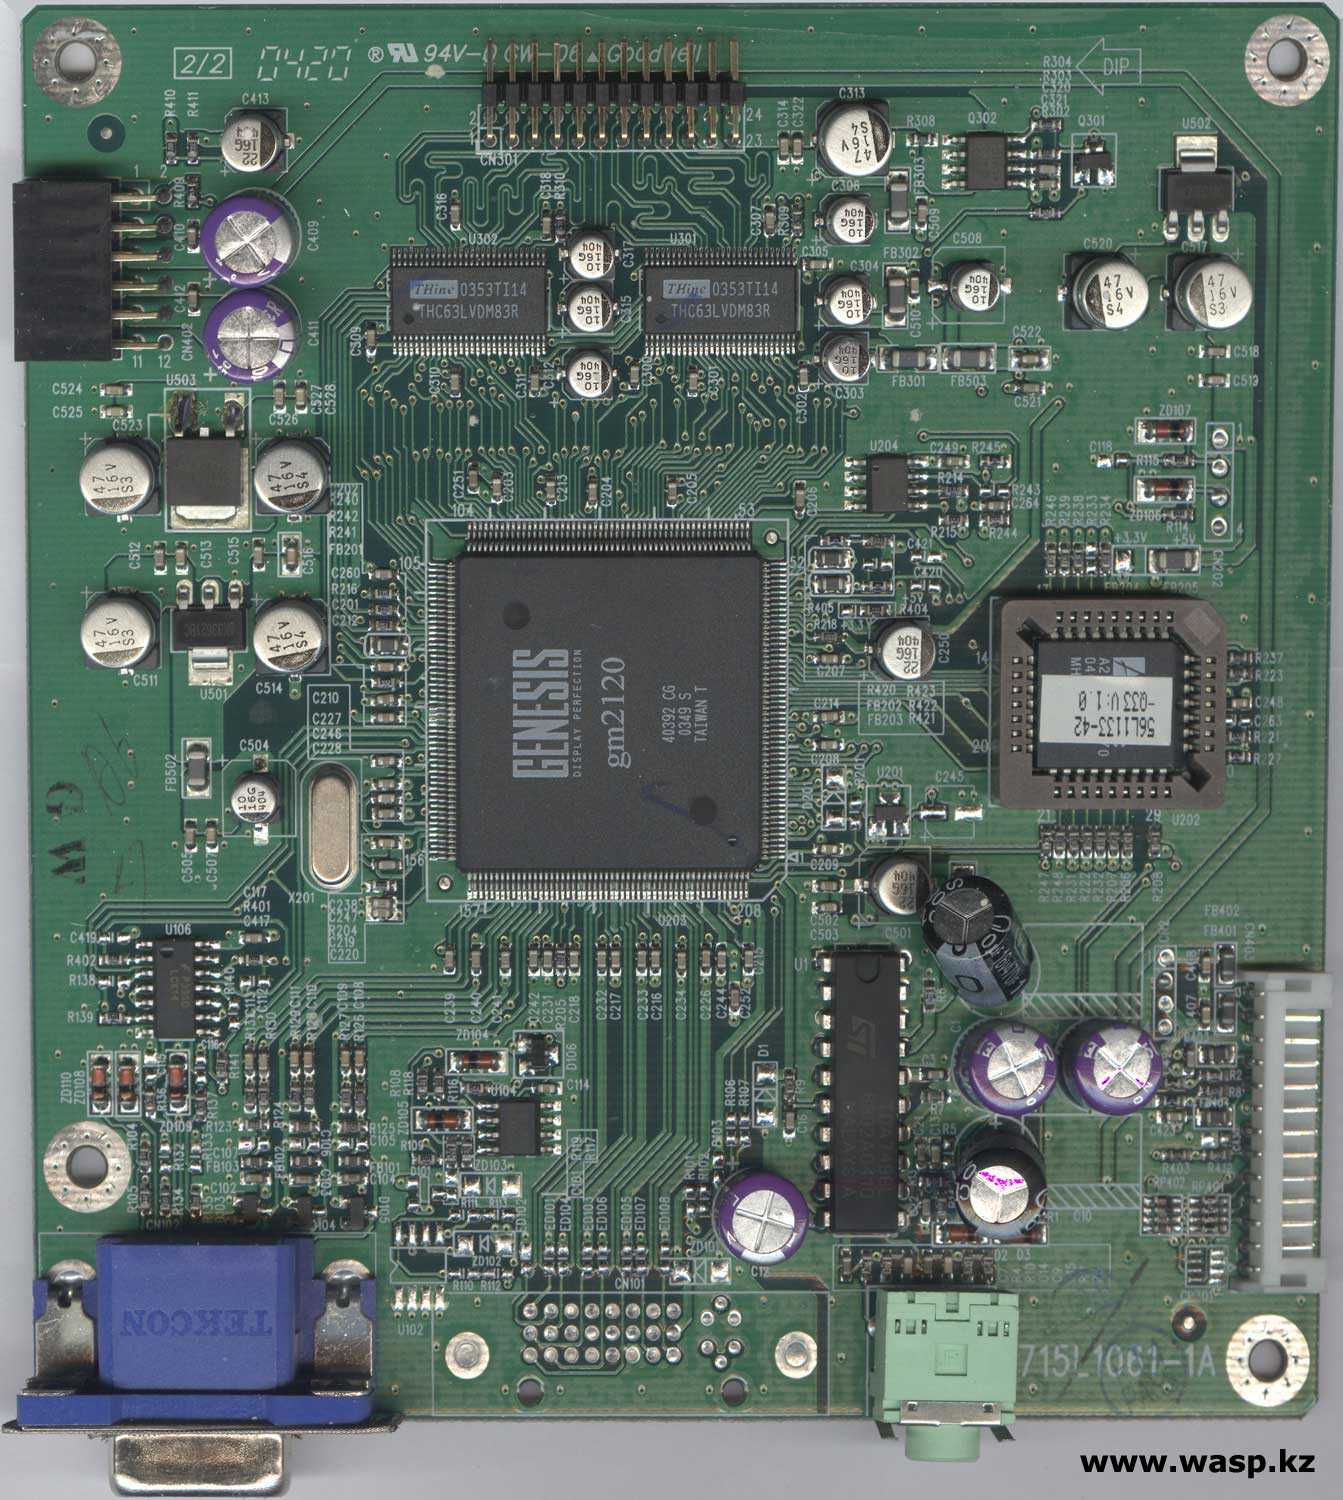 Fujitsu Siemens B17-1 схема системная плата 715L1061-1A Genesis gm2120